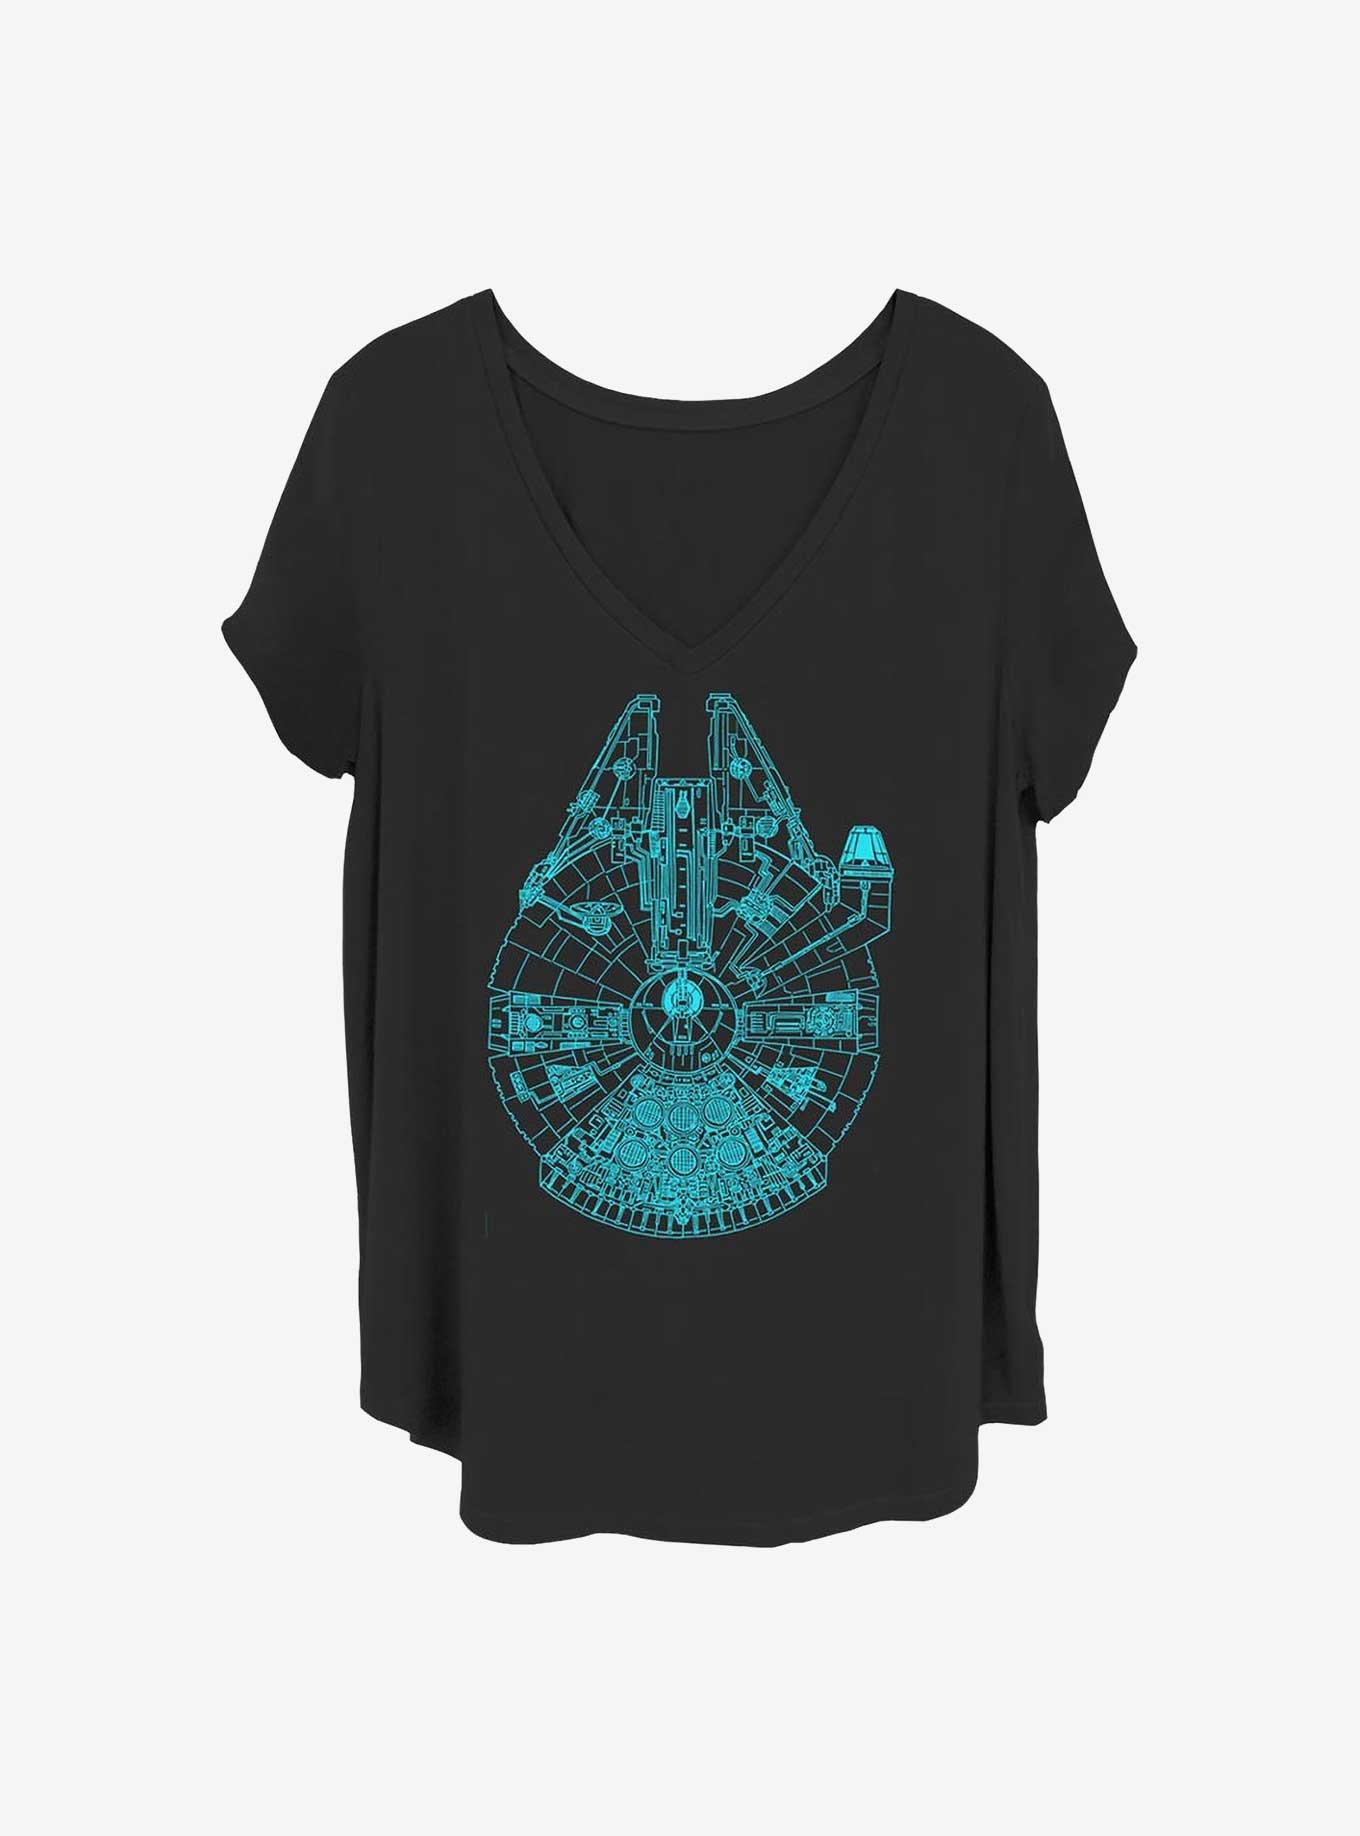 Star Wars Blue Falcon Girls T-Shirt Plus